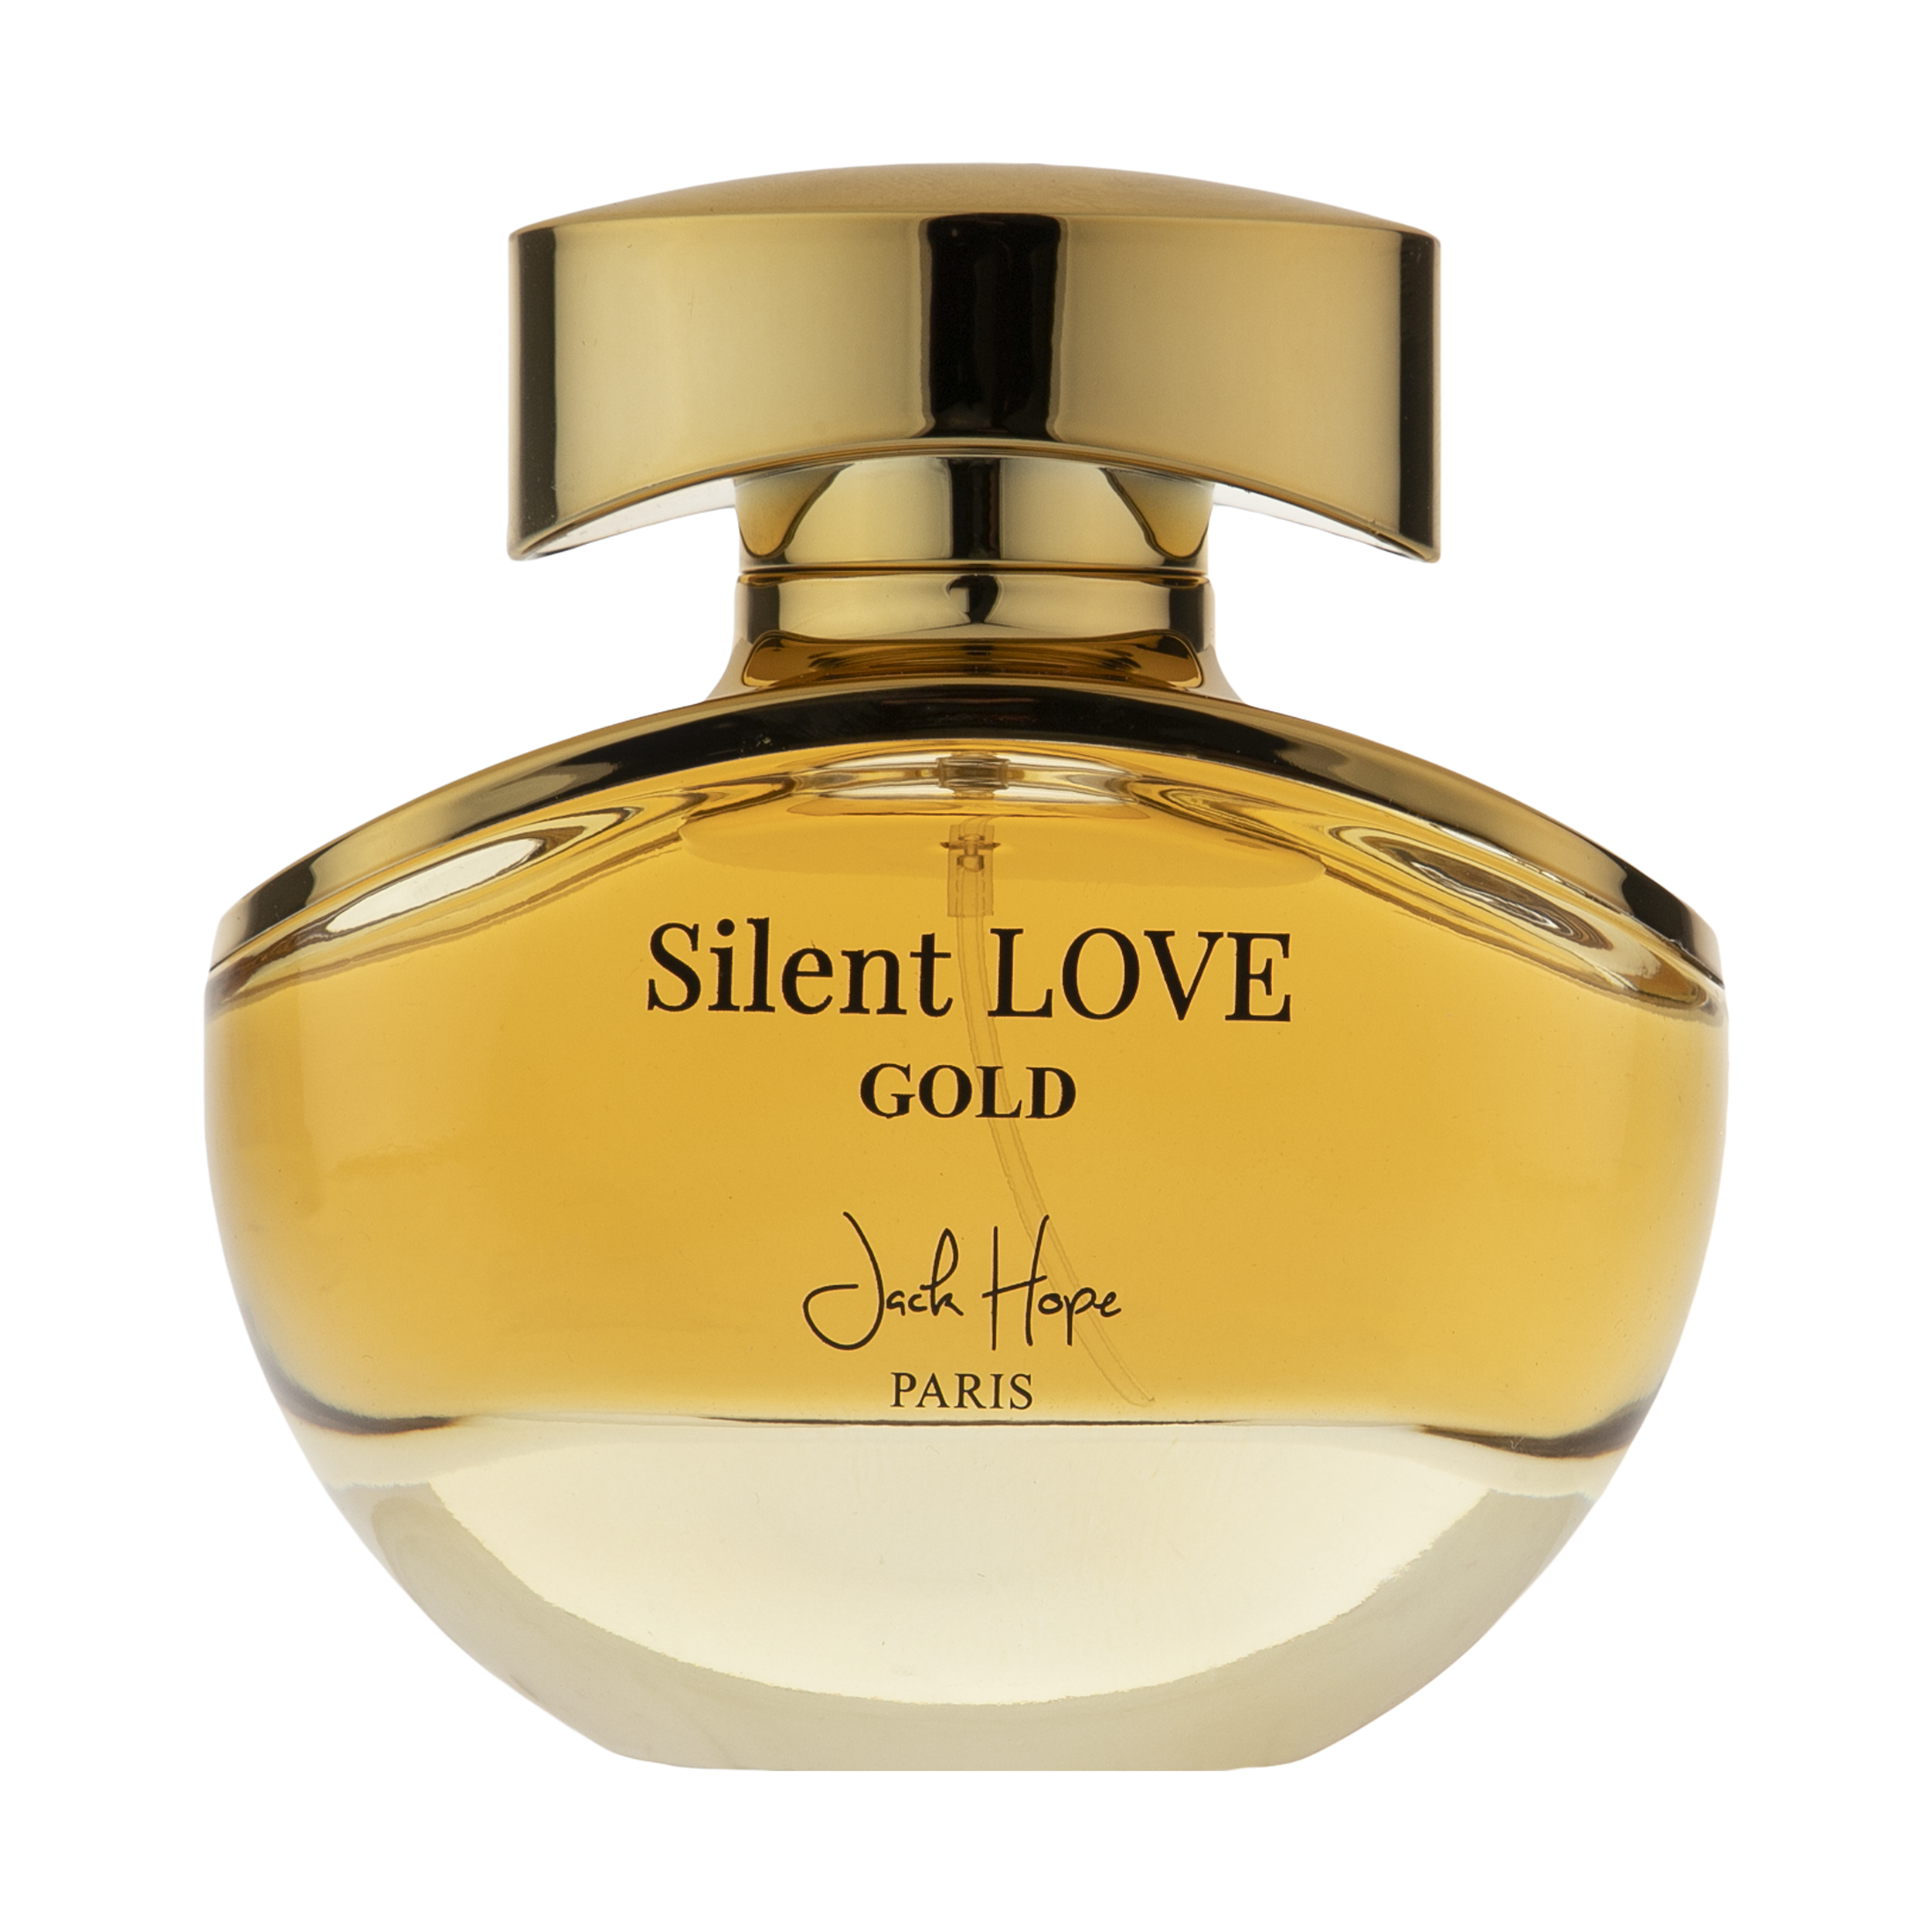 ادو پرفیوم زنانه جک هوپ مدل Silent Love Gold حجم 100میلی لیتر